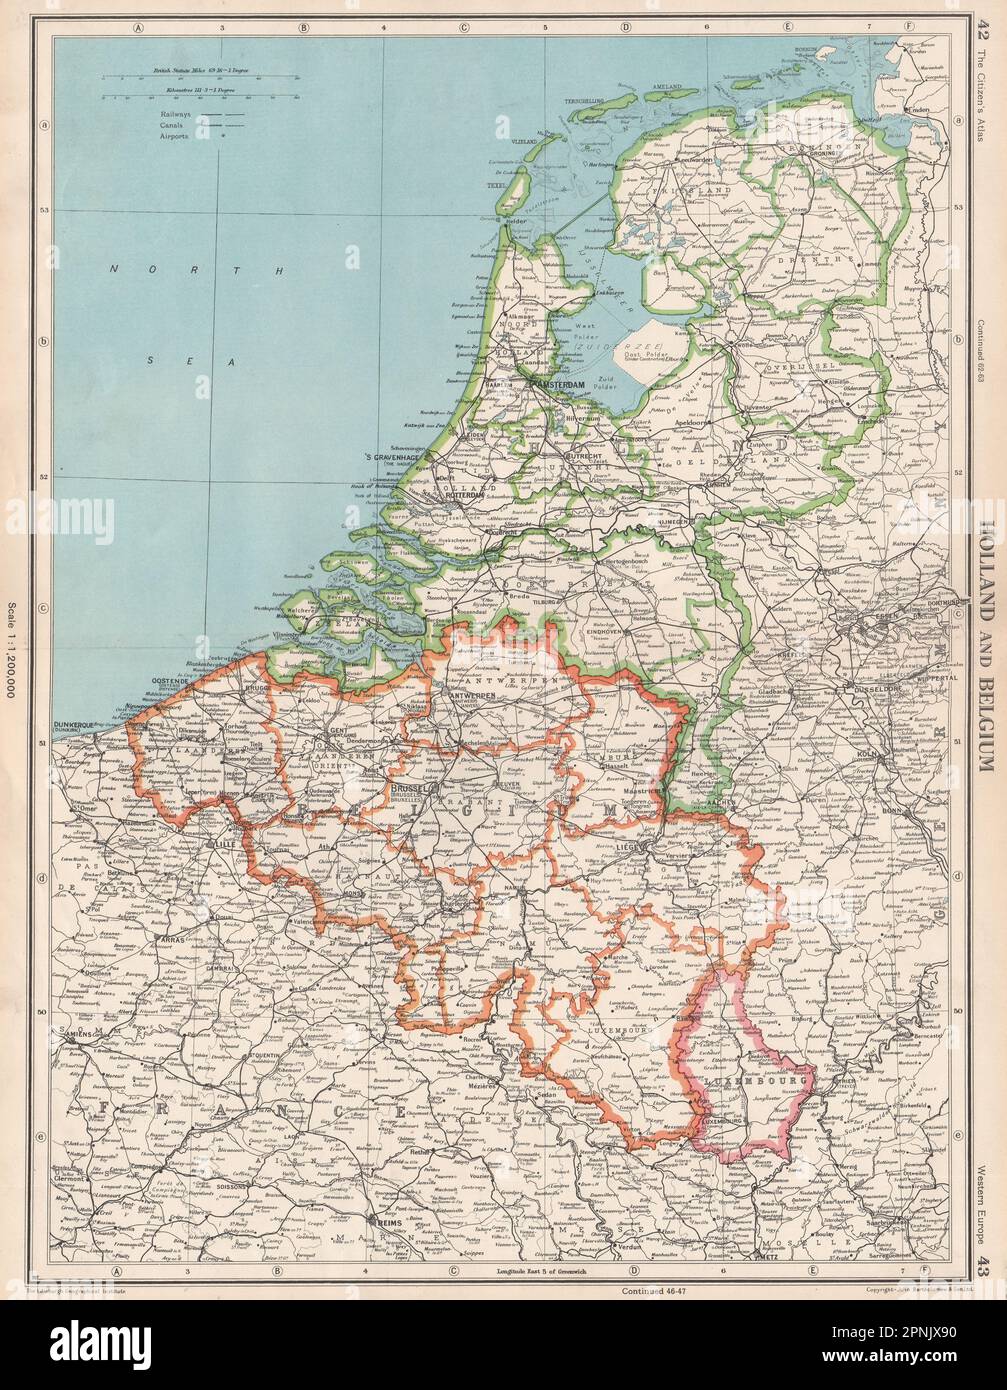 BENELUX. Netherlands shows Oost Polder (Flevopolder) under construction 1952 map Stock Photo